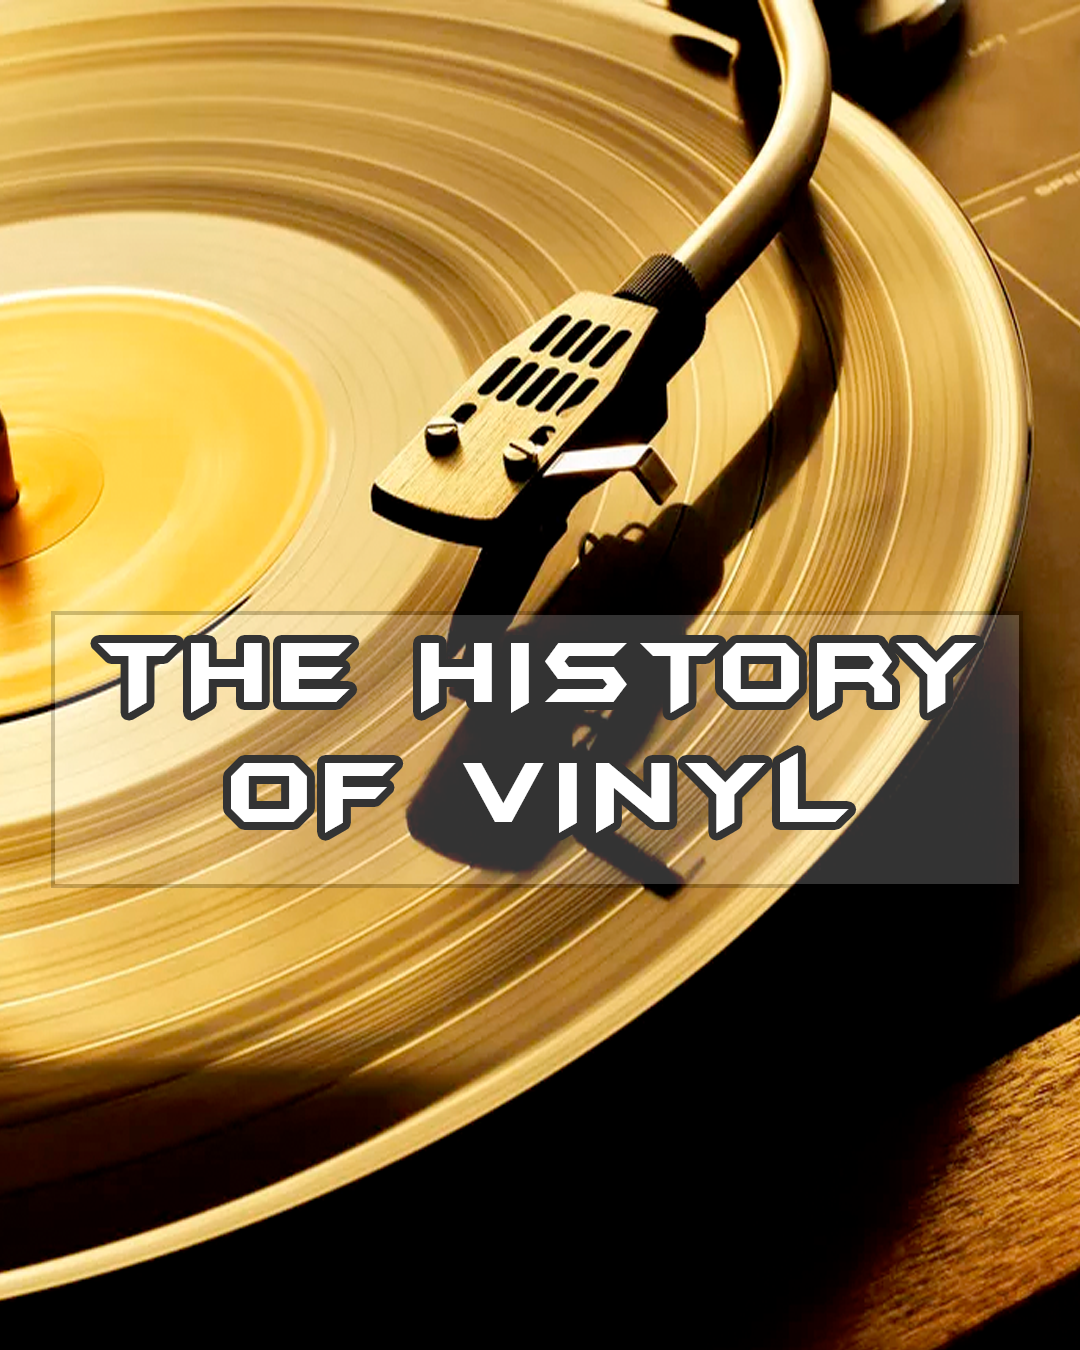 The History of Vinyl